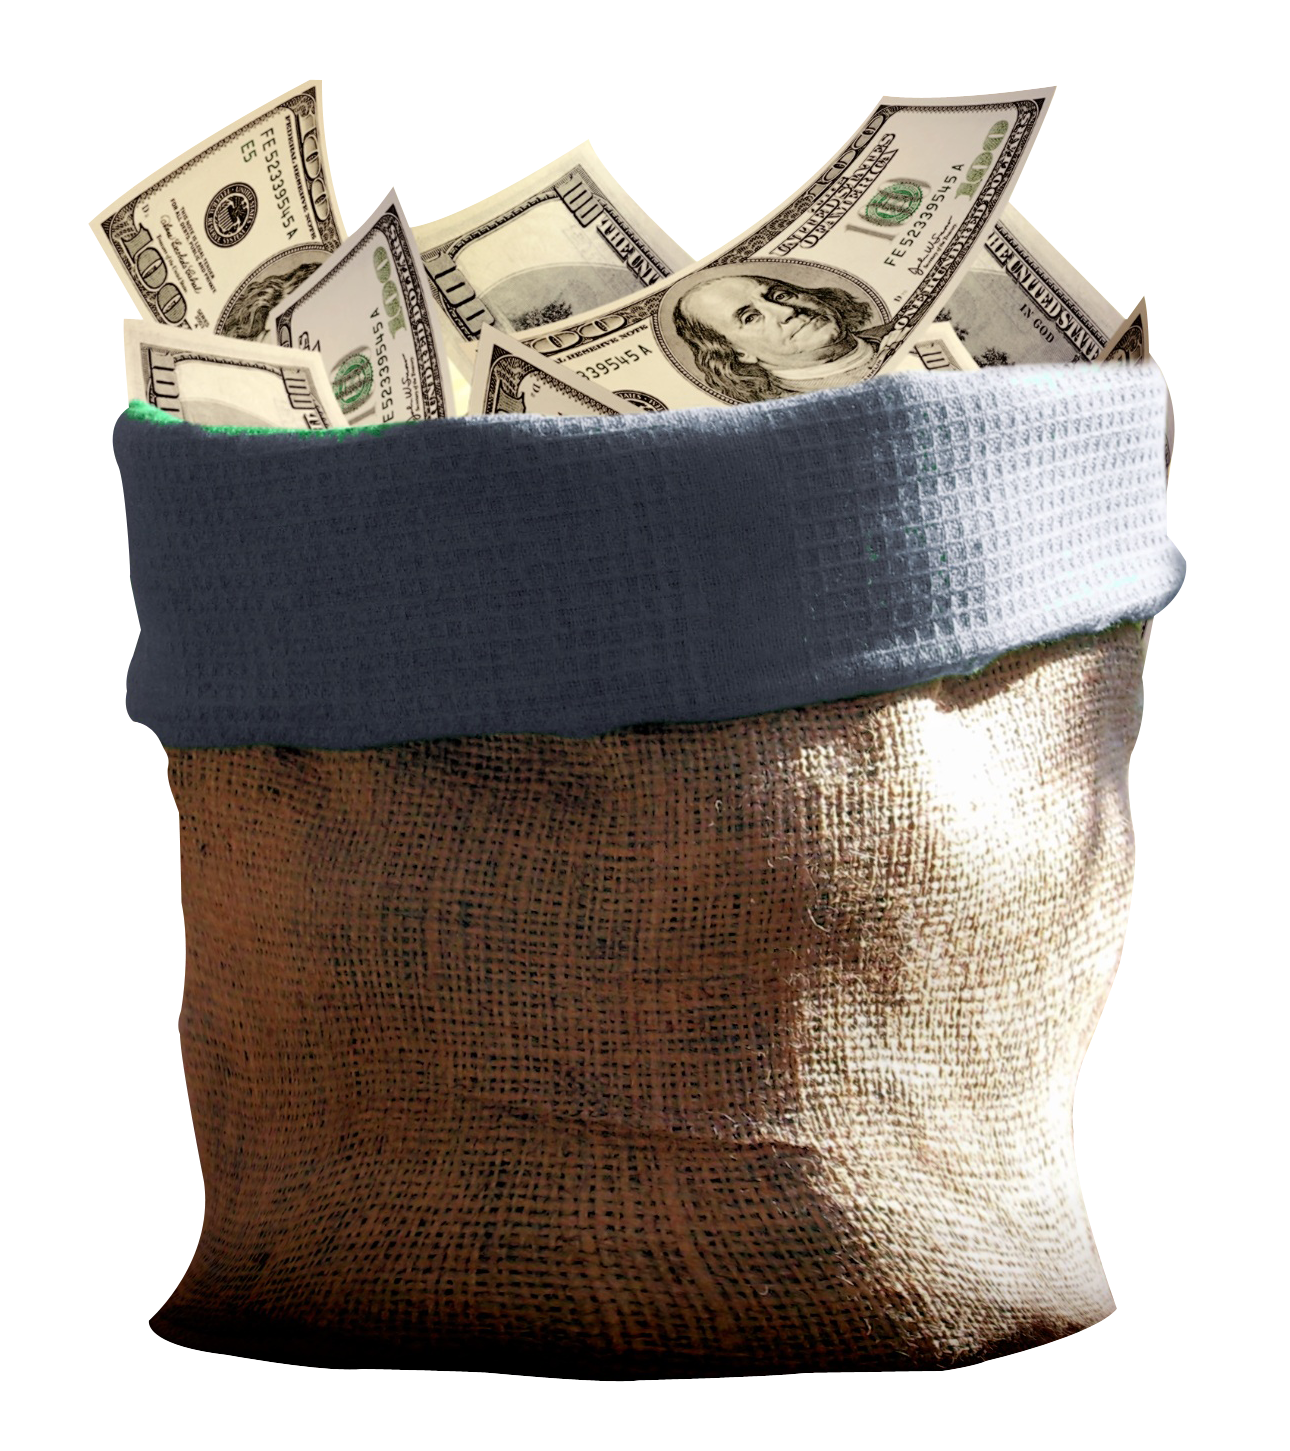 Money Bag PNG Image